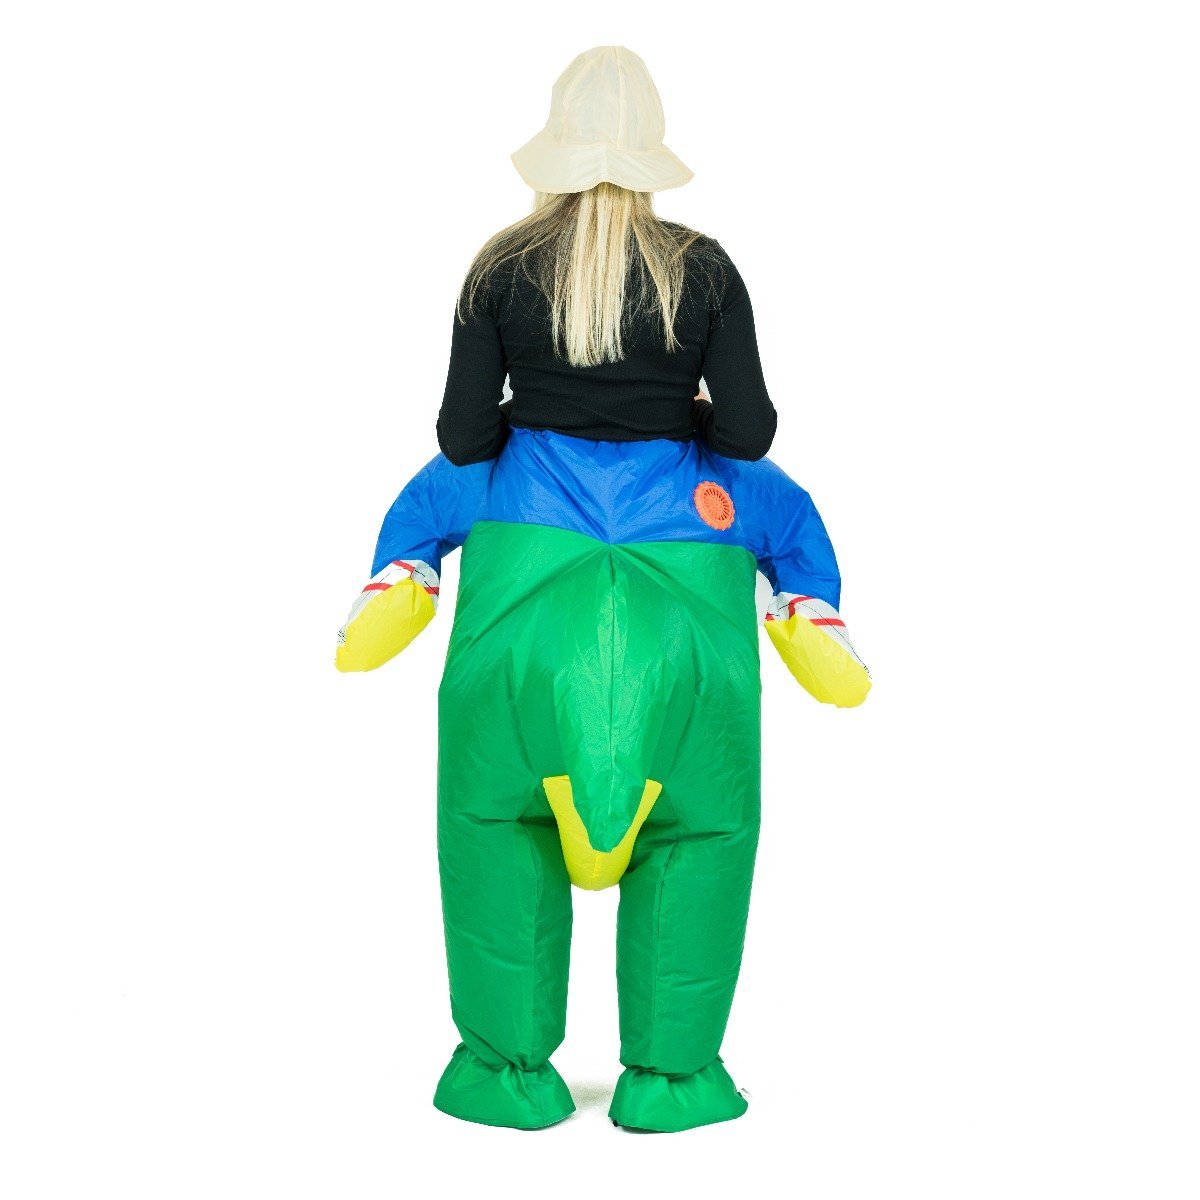 Bodysocks - Inflatable Dinosaur Costume